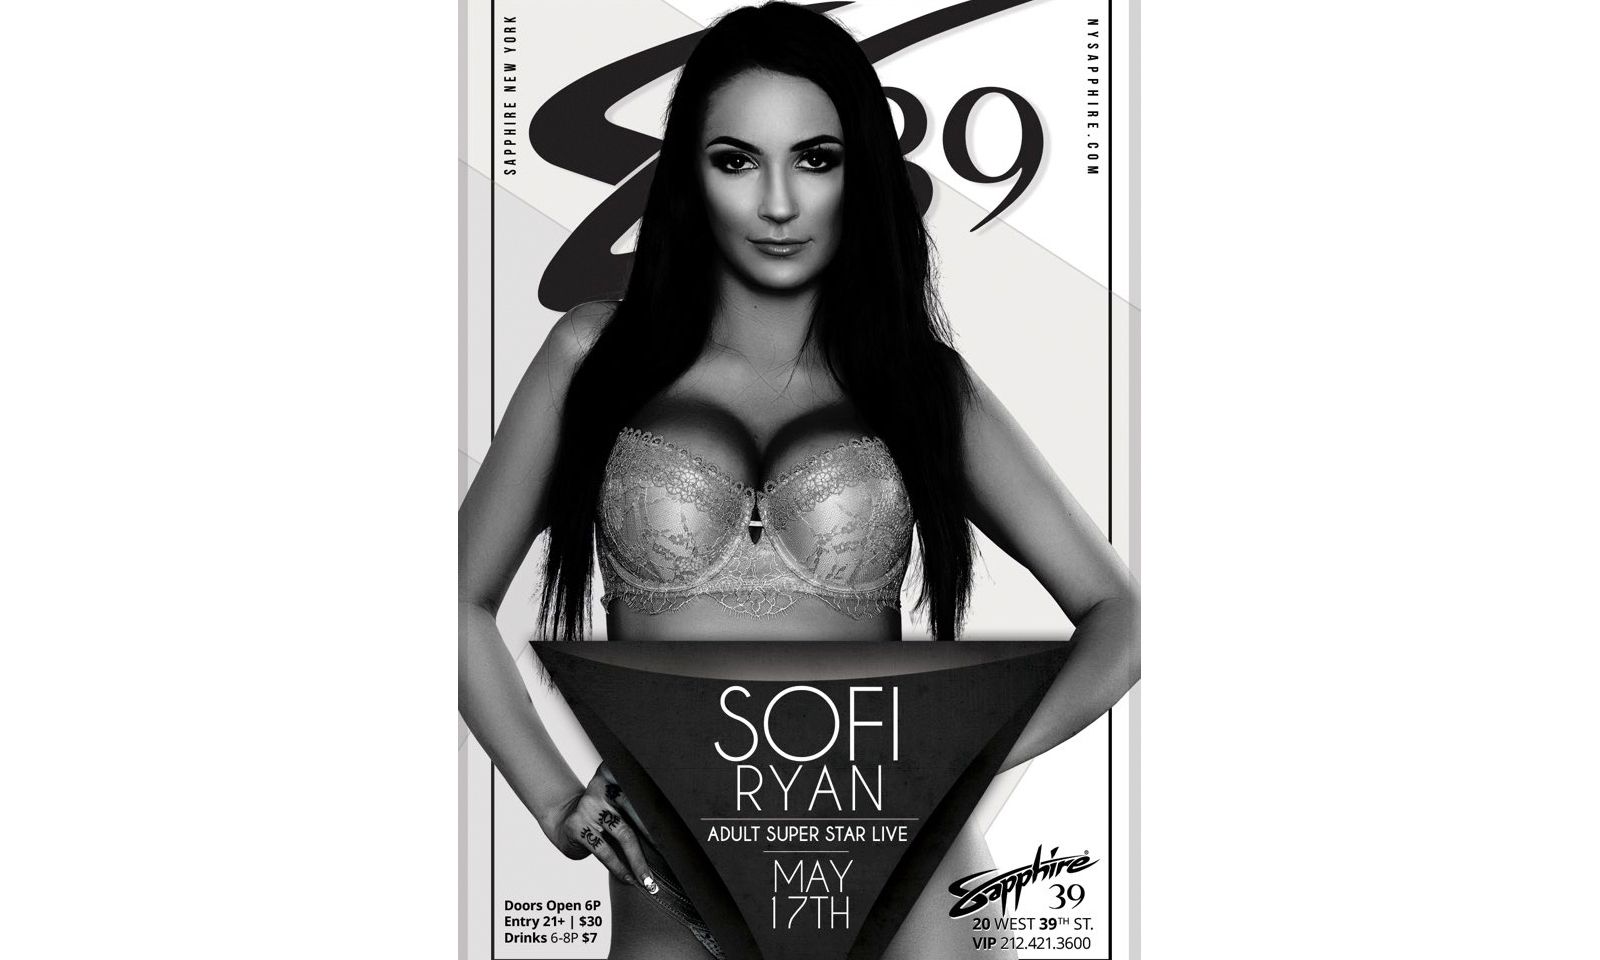 Sofi Ryan Dancing on Thursday at New York’s Sapphire 39